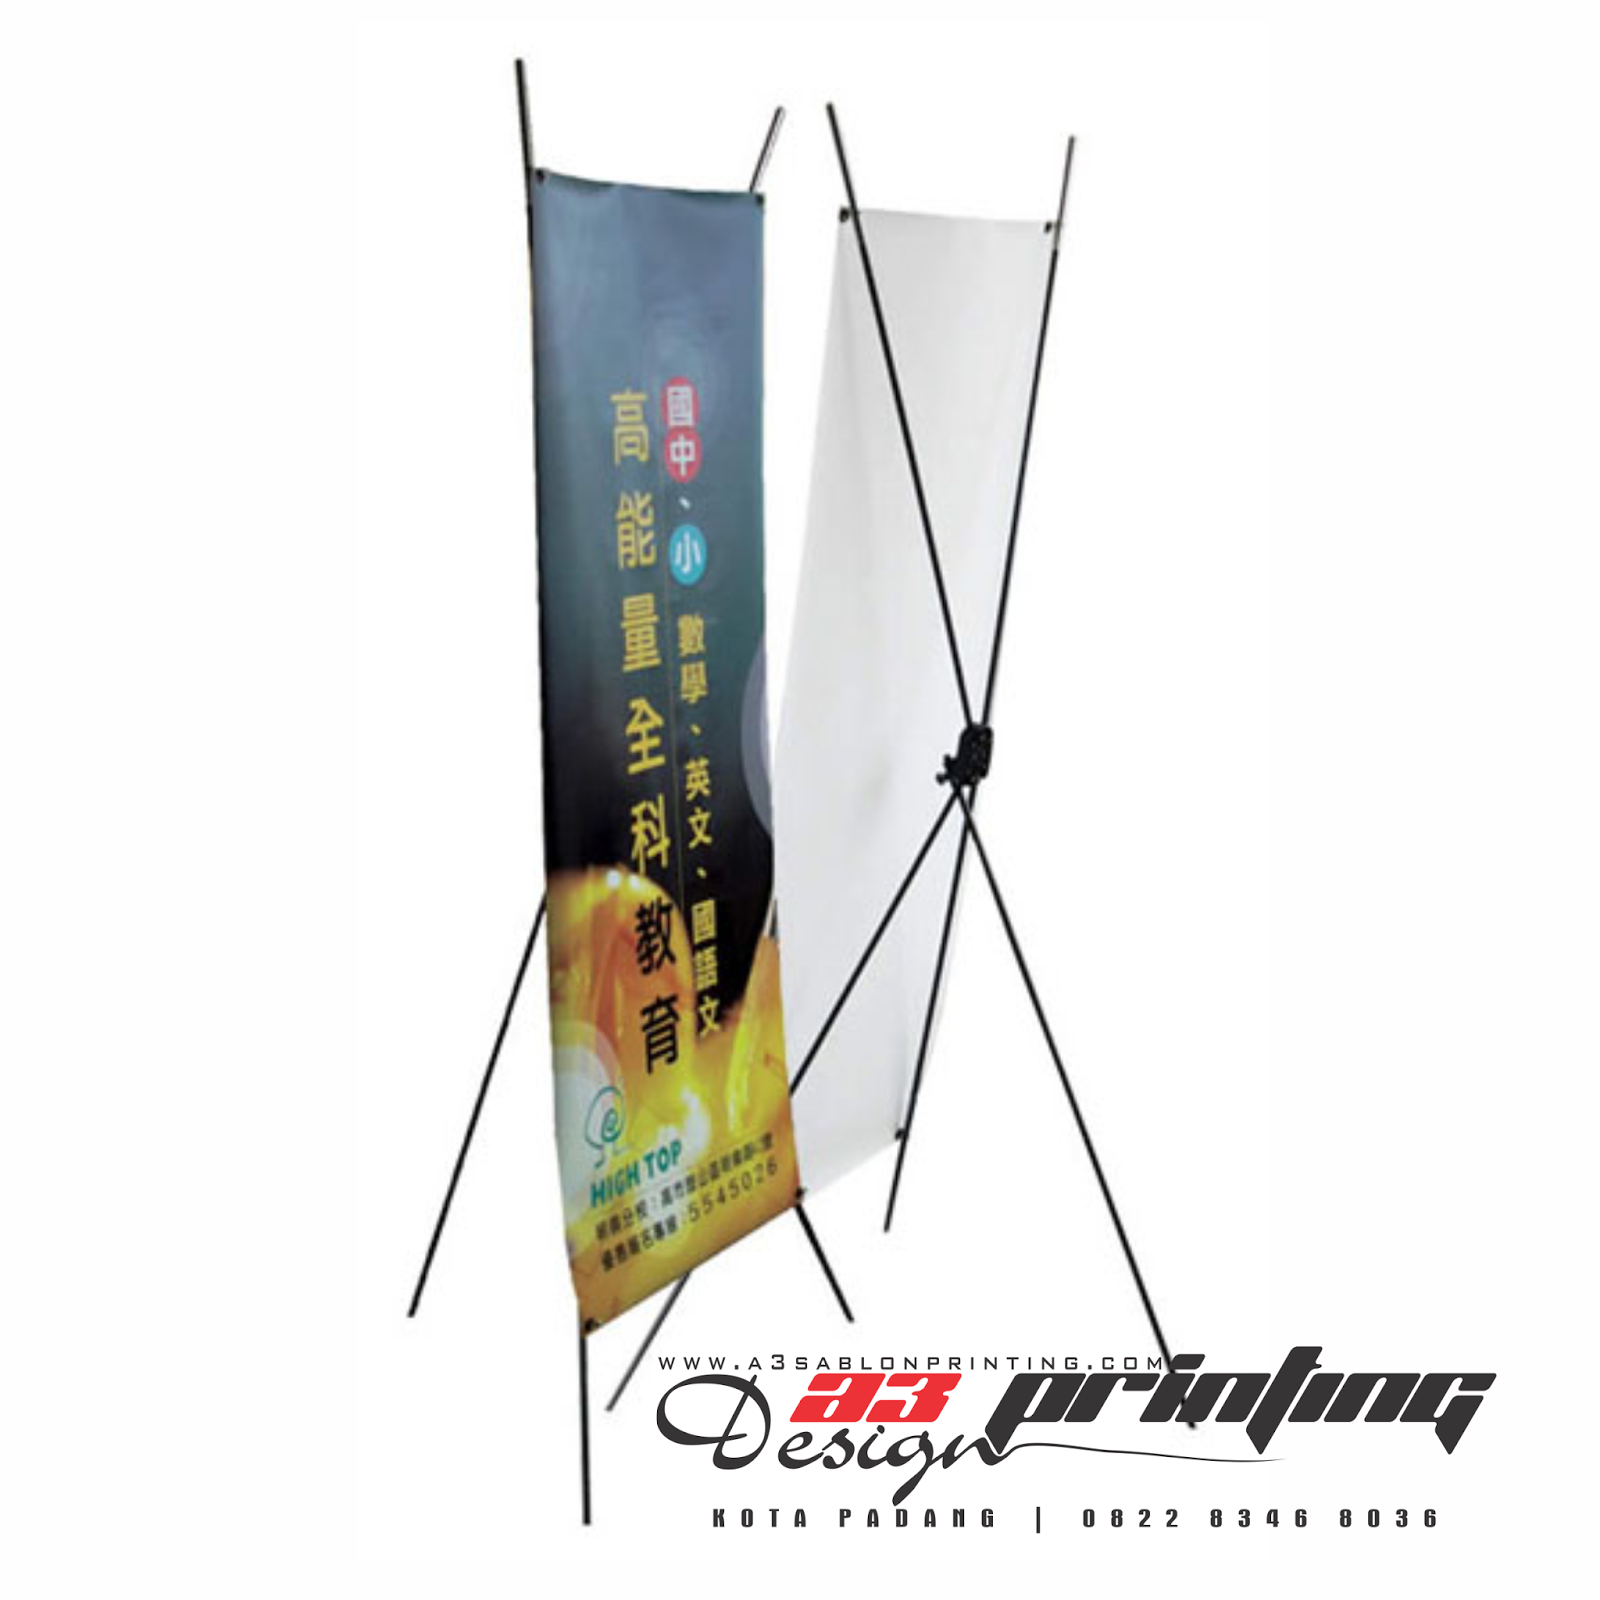 X Y Banner Kota Padang A3 Printing Advertising 